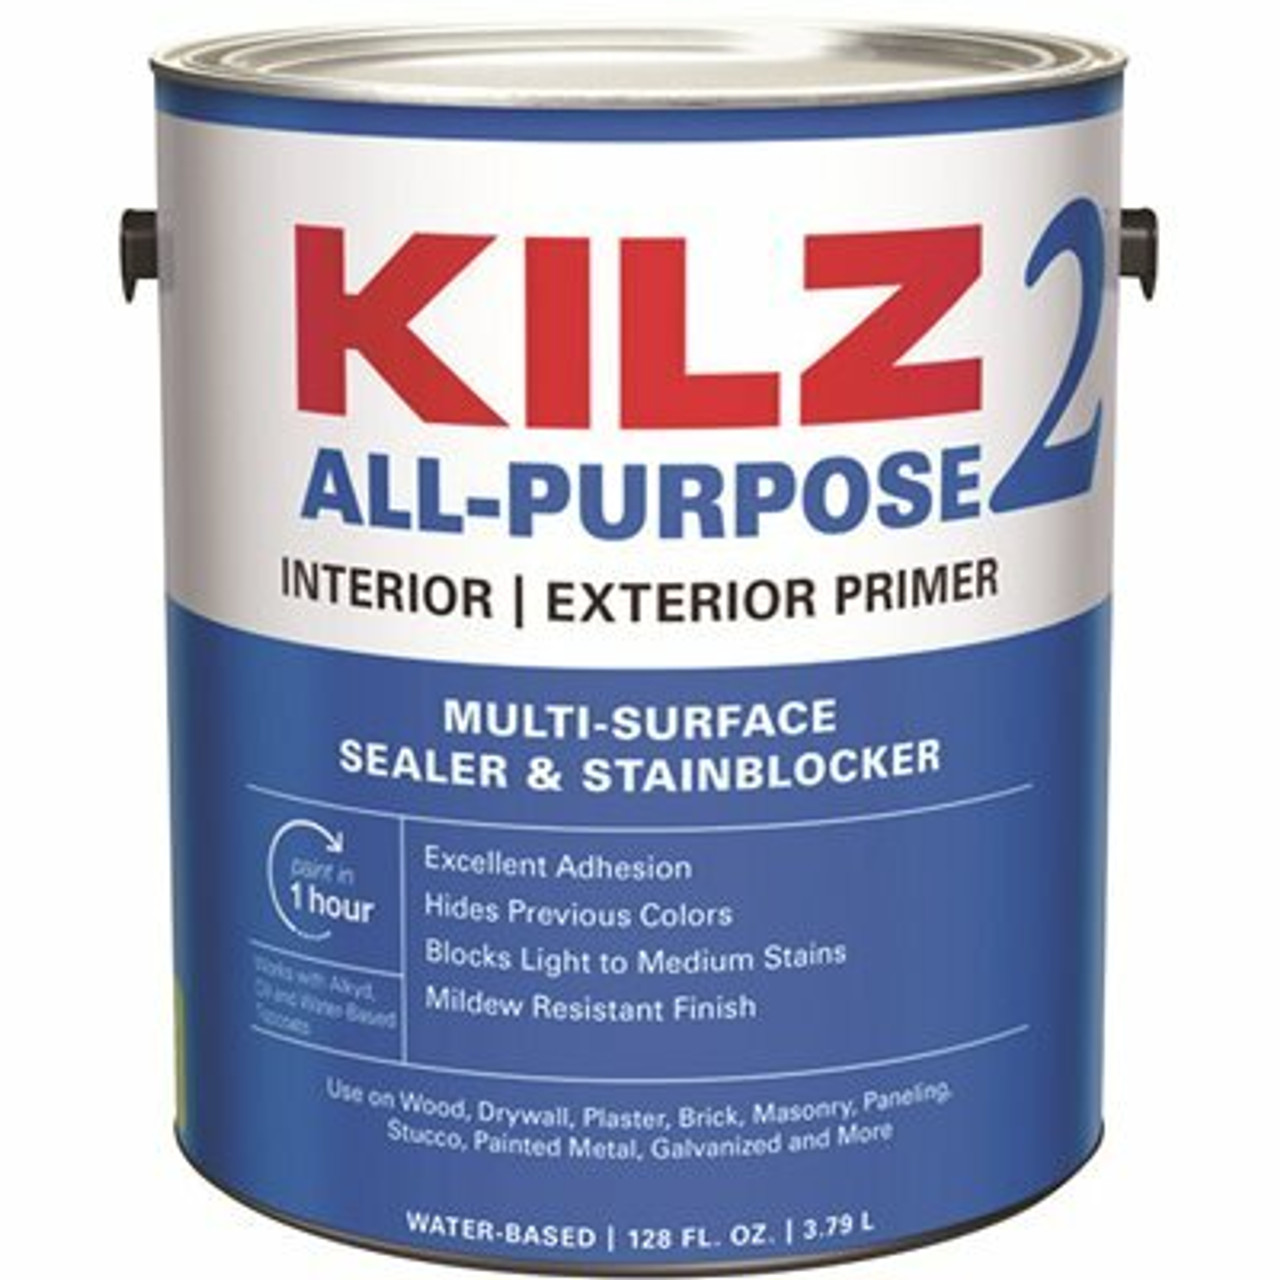 Kilz 2 All Purpose 1 Gal. White Interior/Exterior Multi-Surface Primer, Sealer, And Stain Blocker